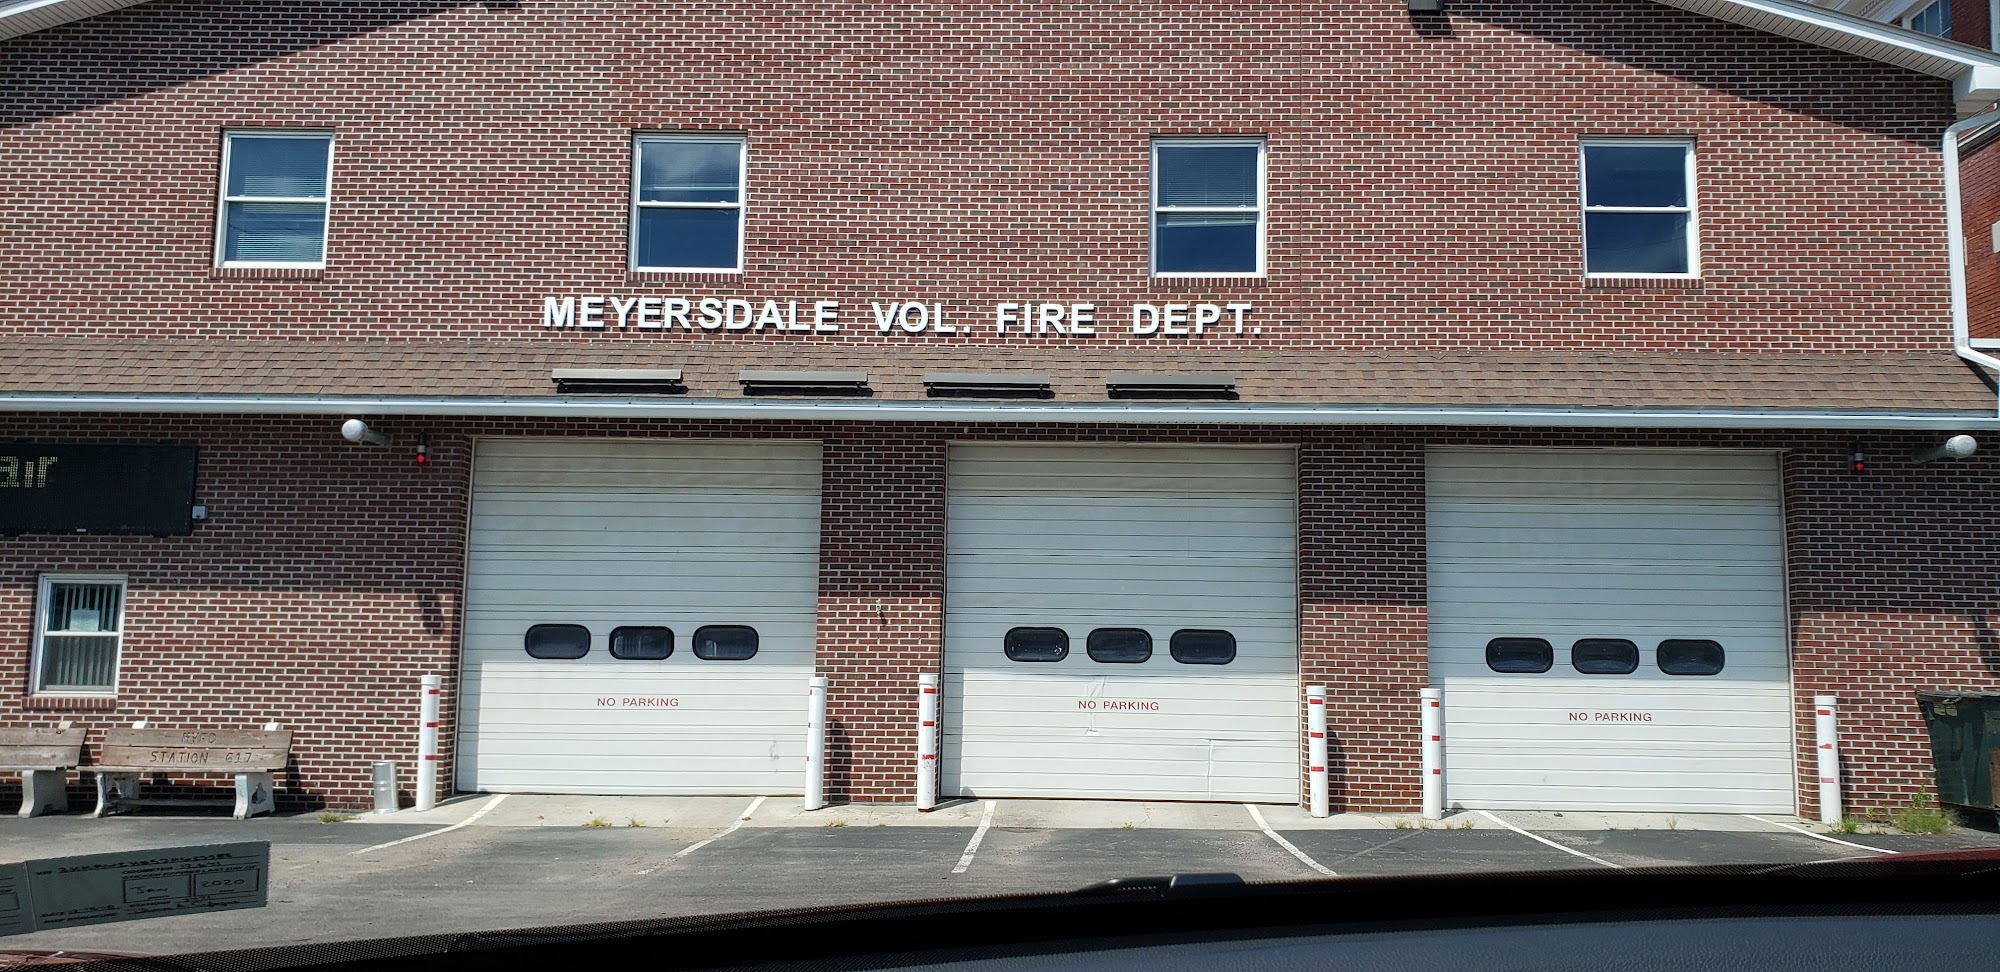 Meyersdale Volunteer Fire Department 202 Main St, Meyersdale Pennsylvania 15552